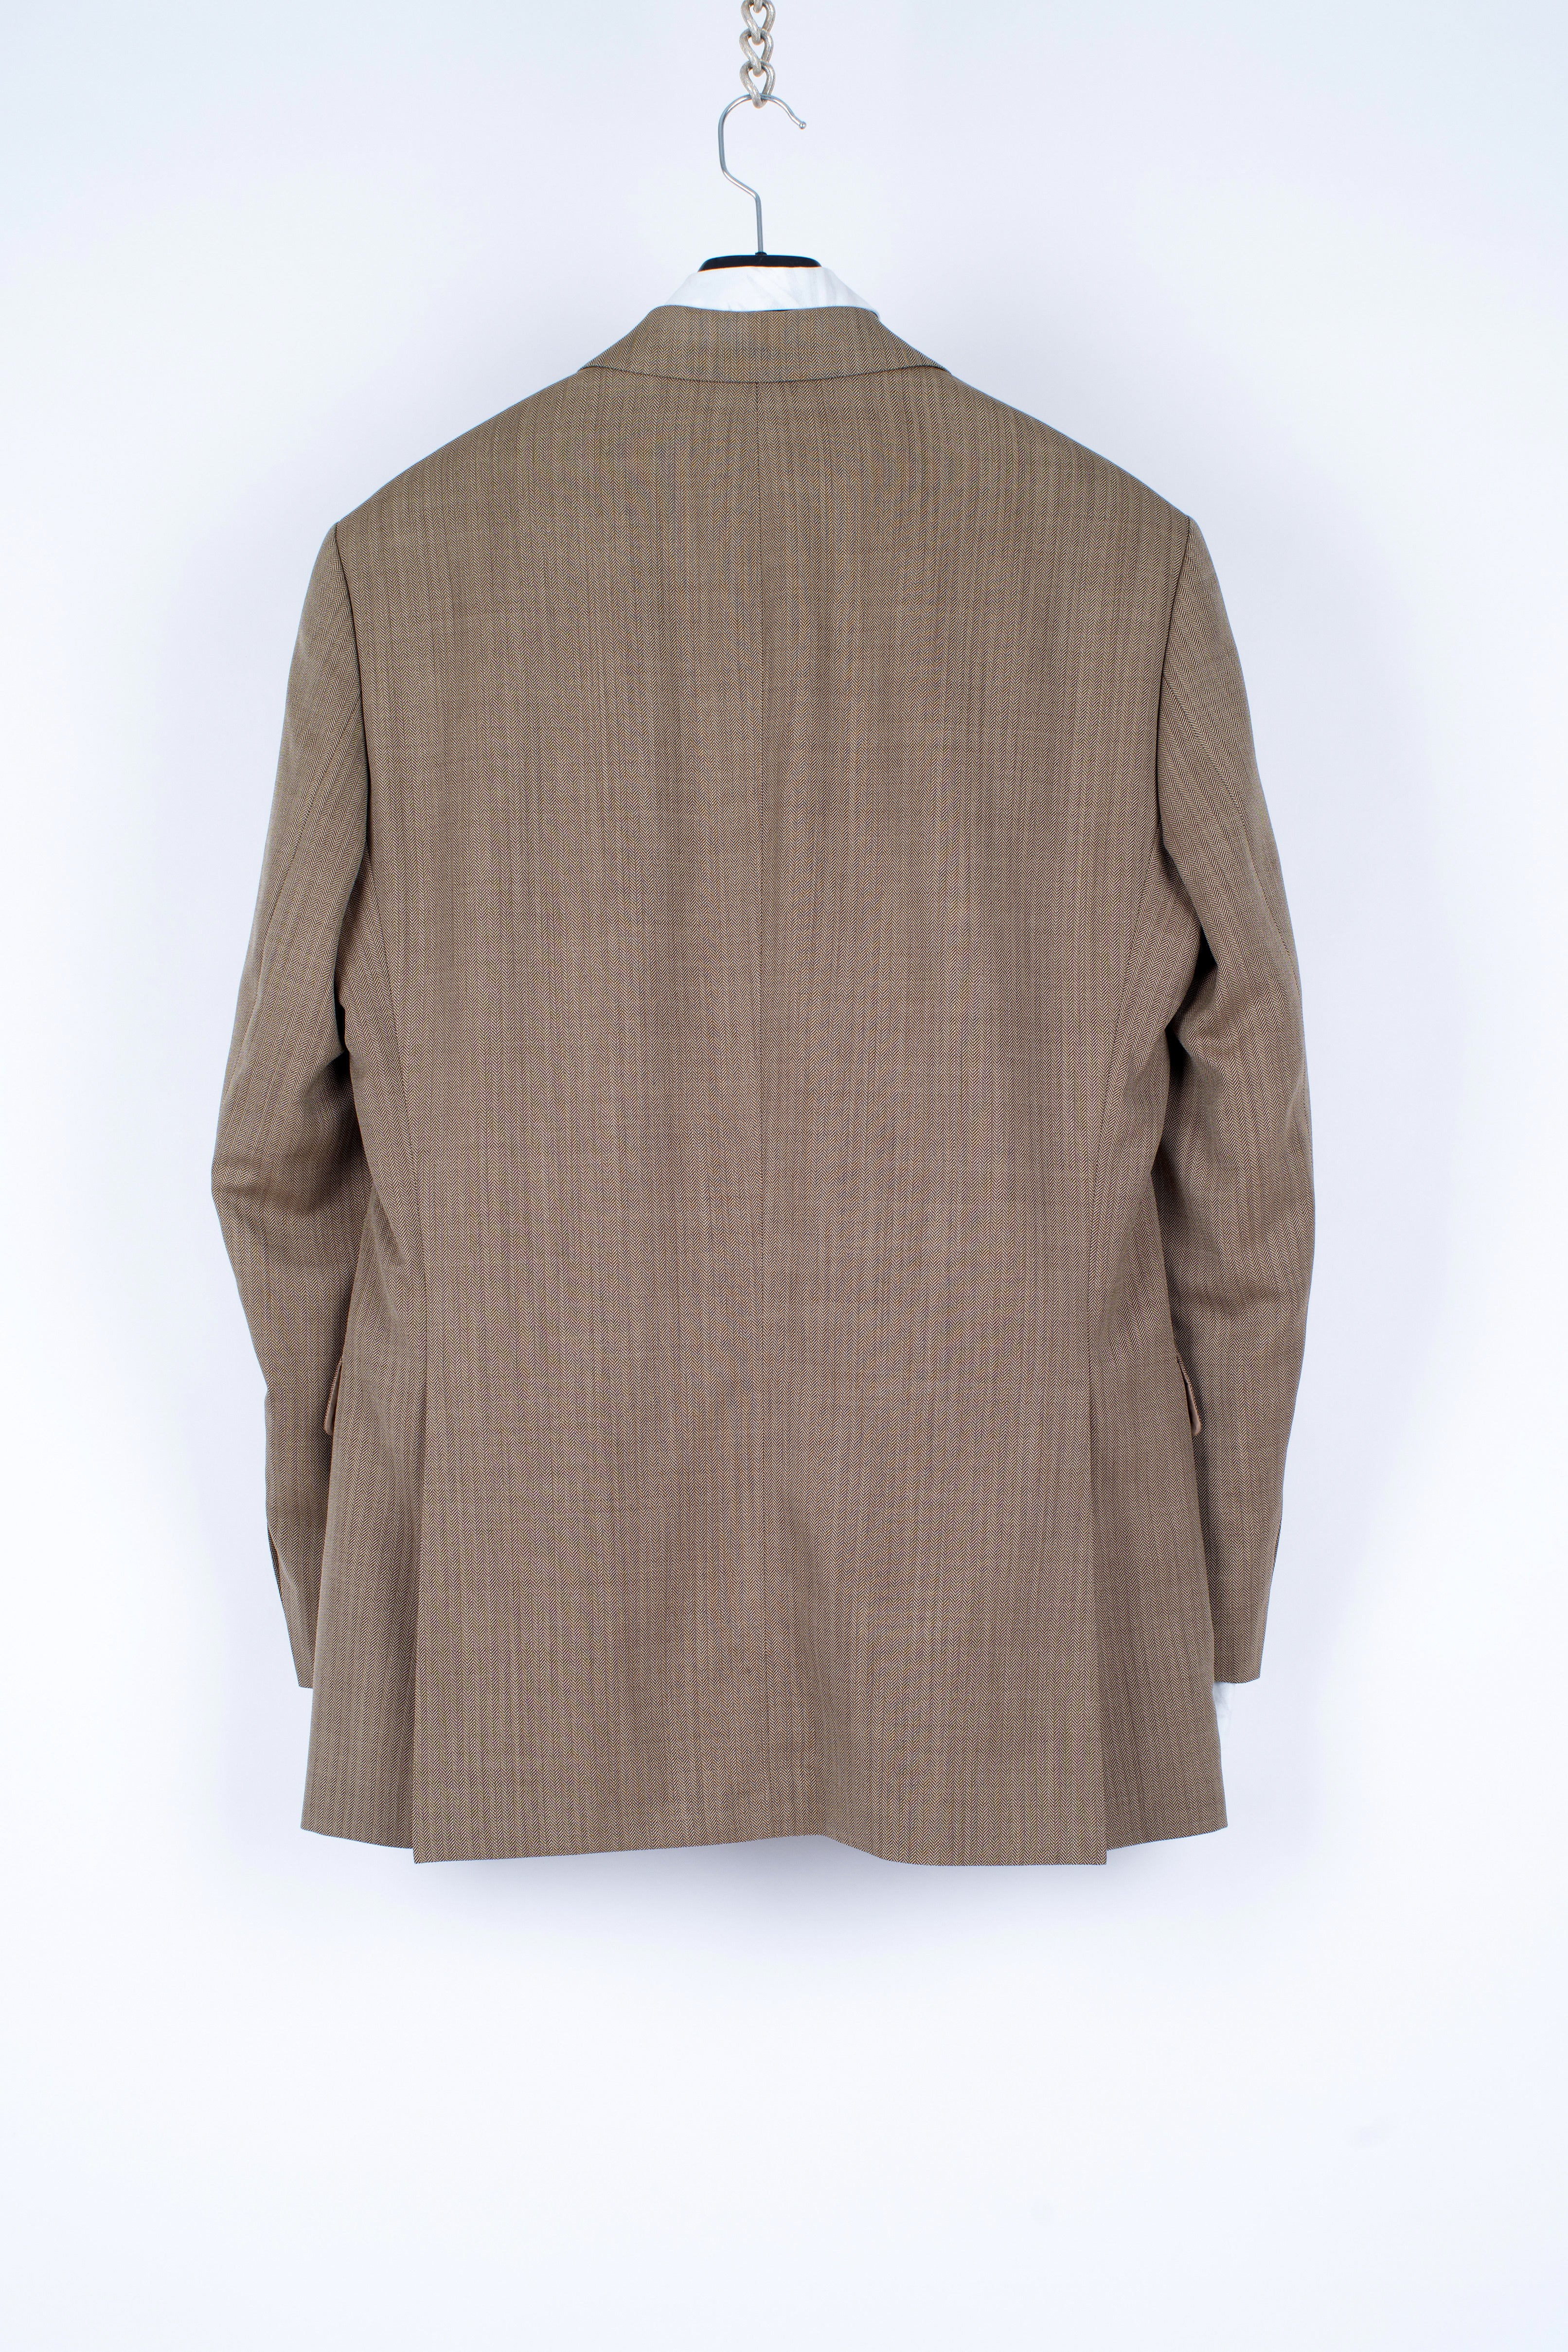 HUGO BOSS Wool Silk Blazer, US 38/EUR 48